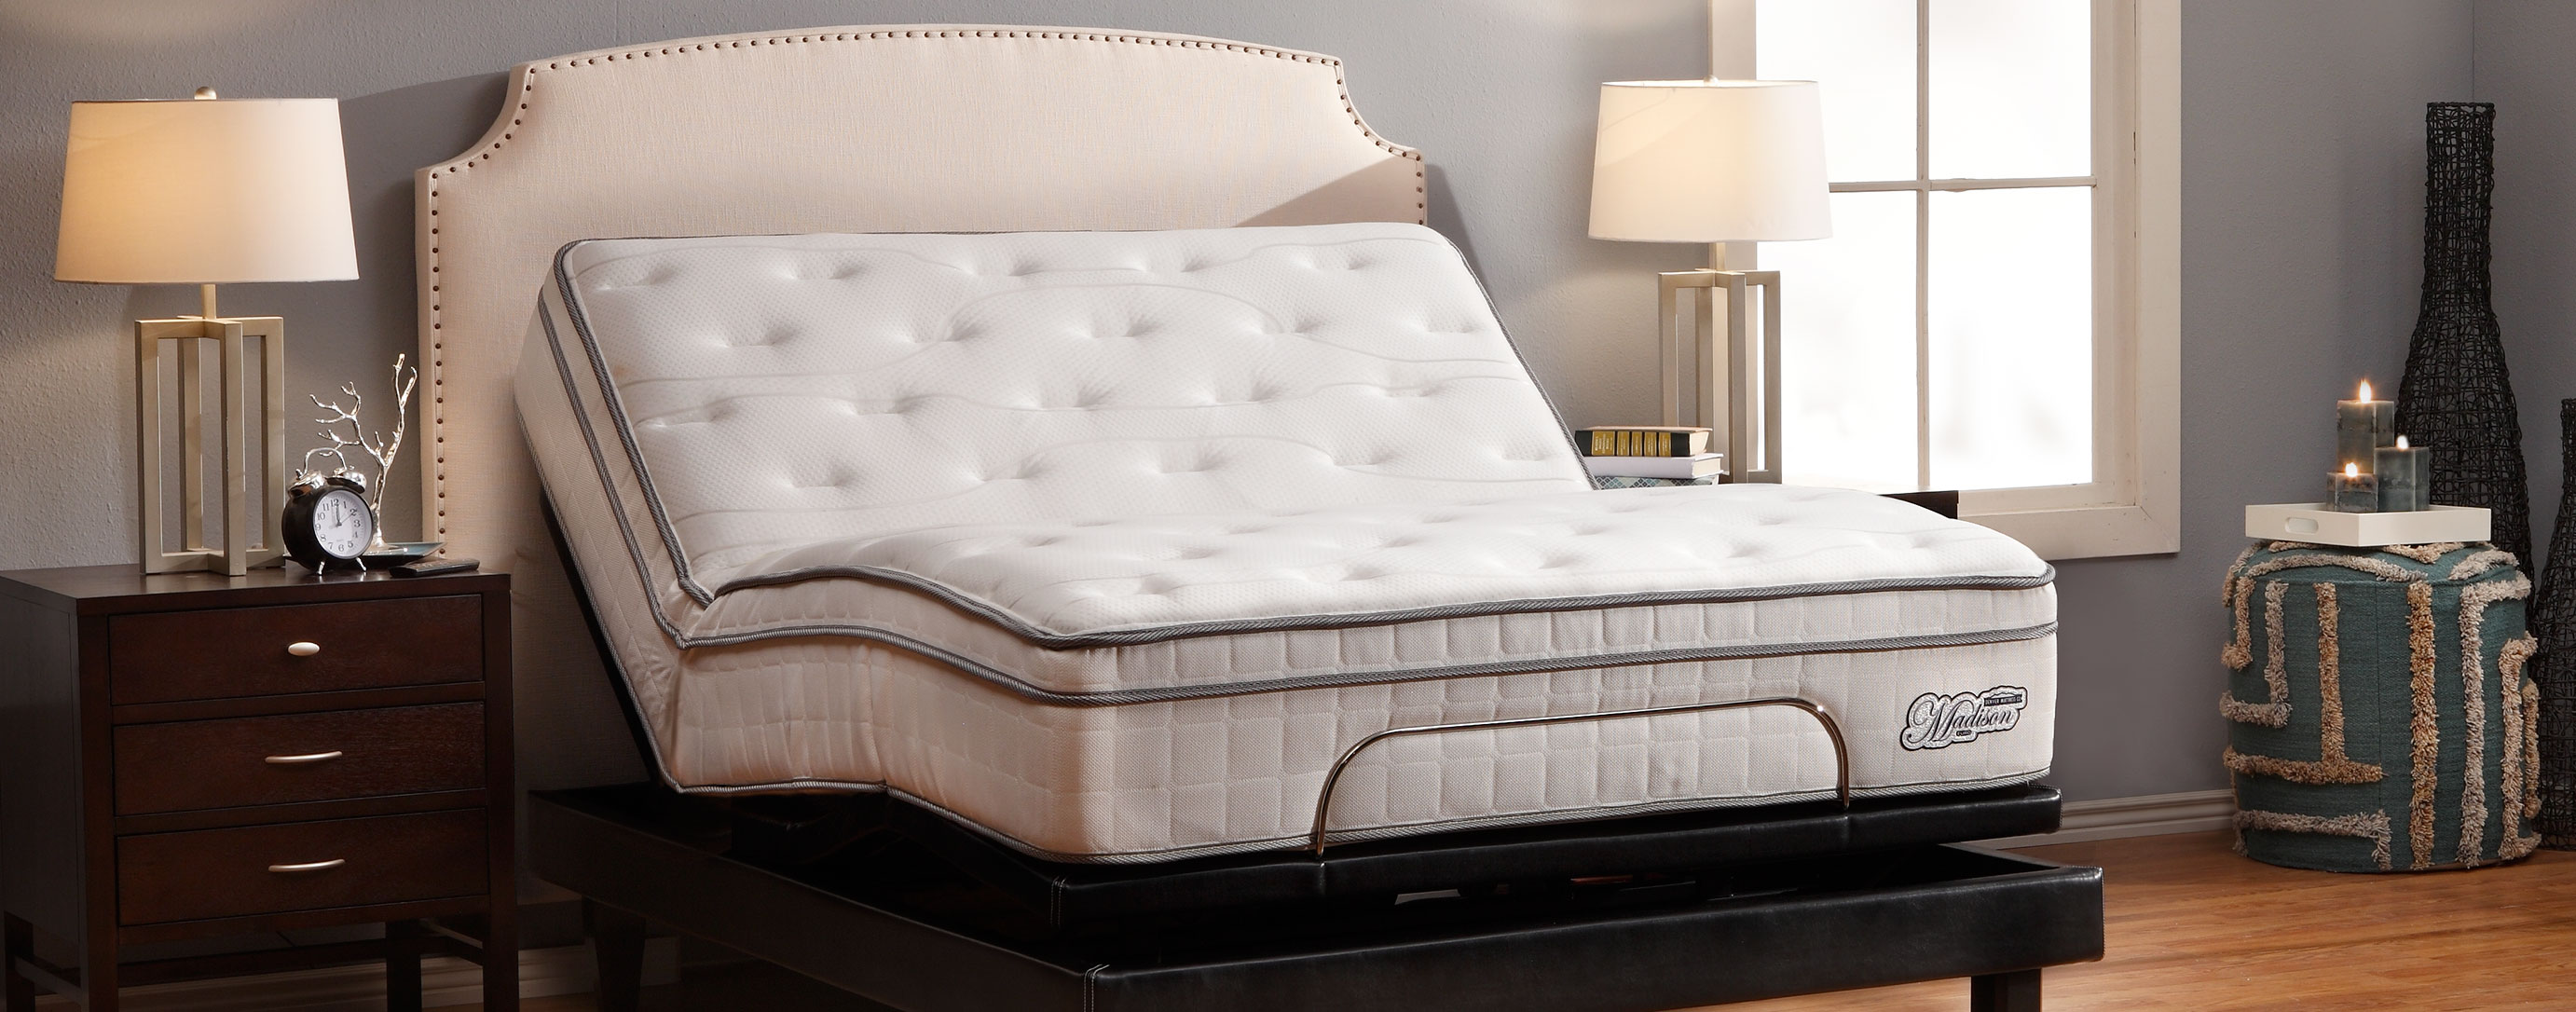 denver mattress fourth of july sale